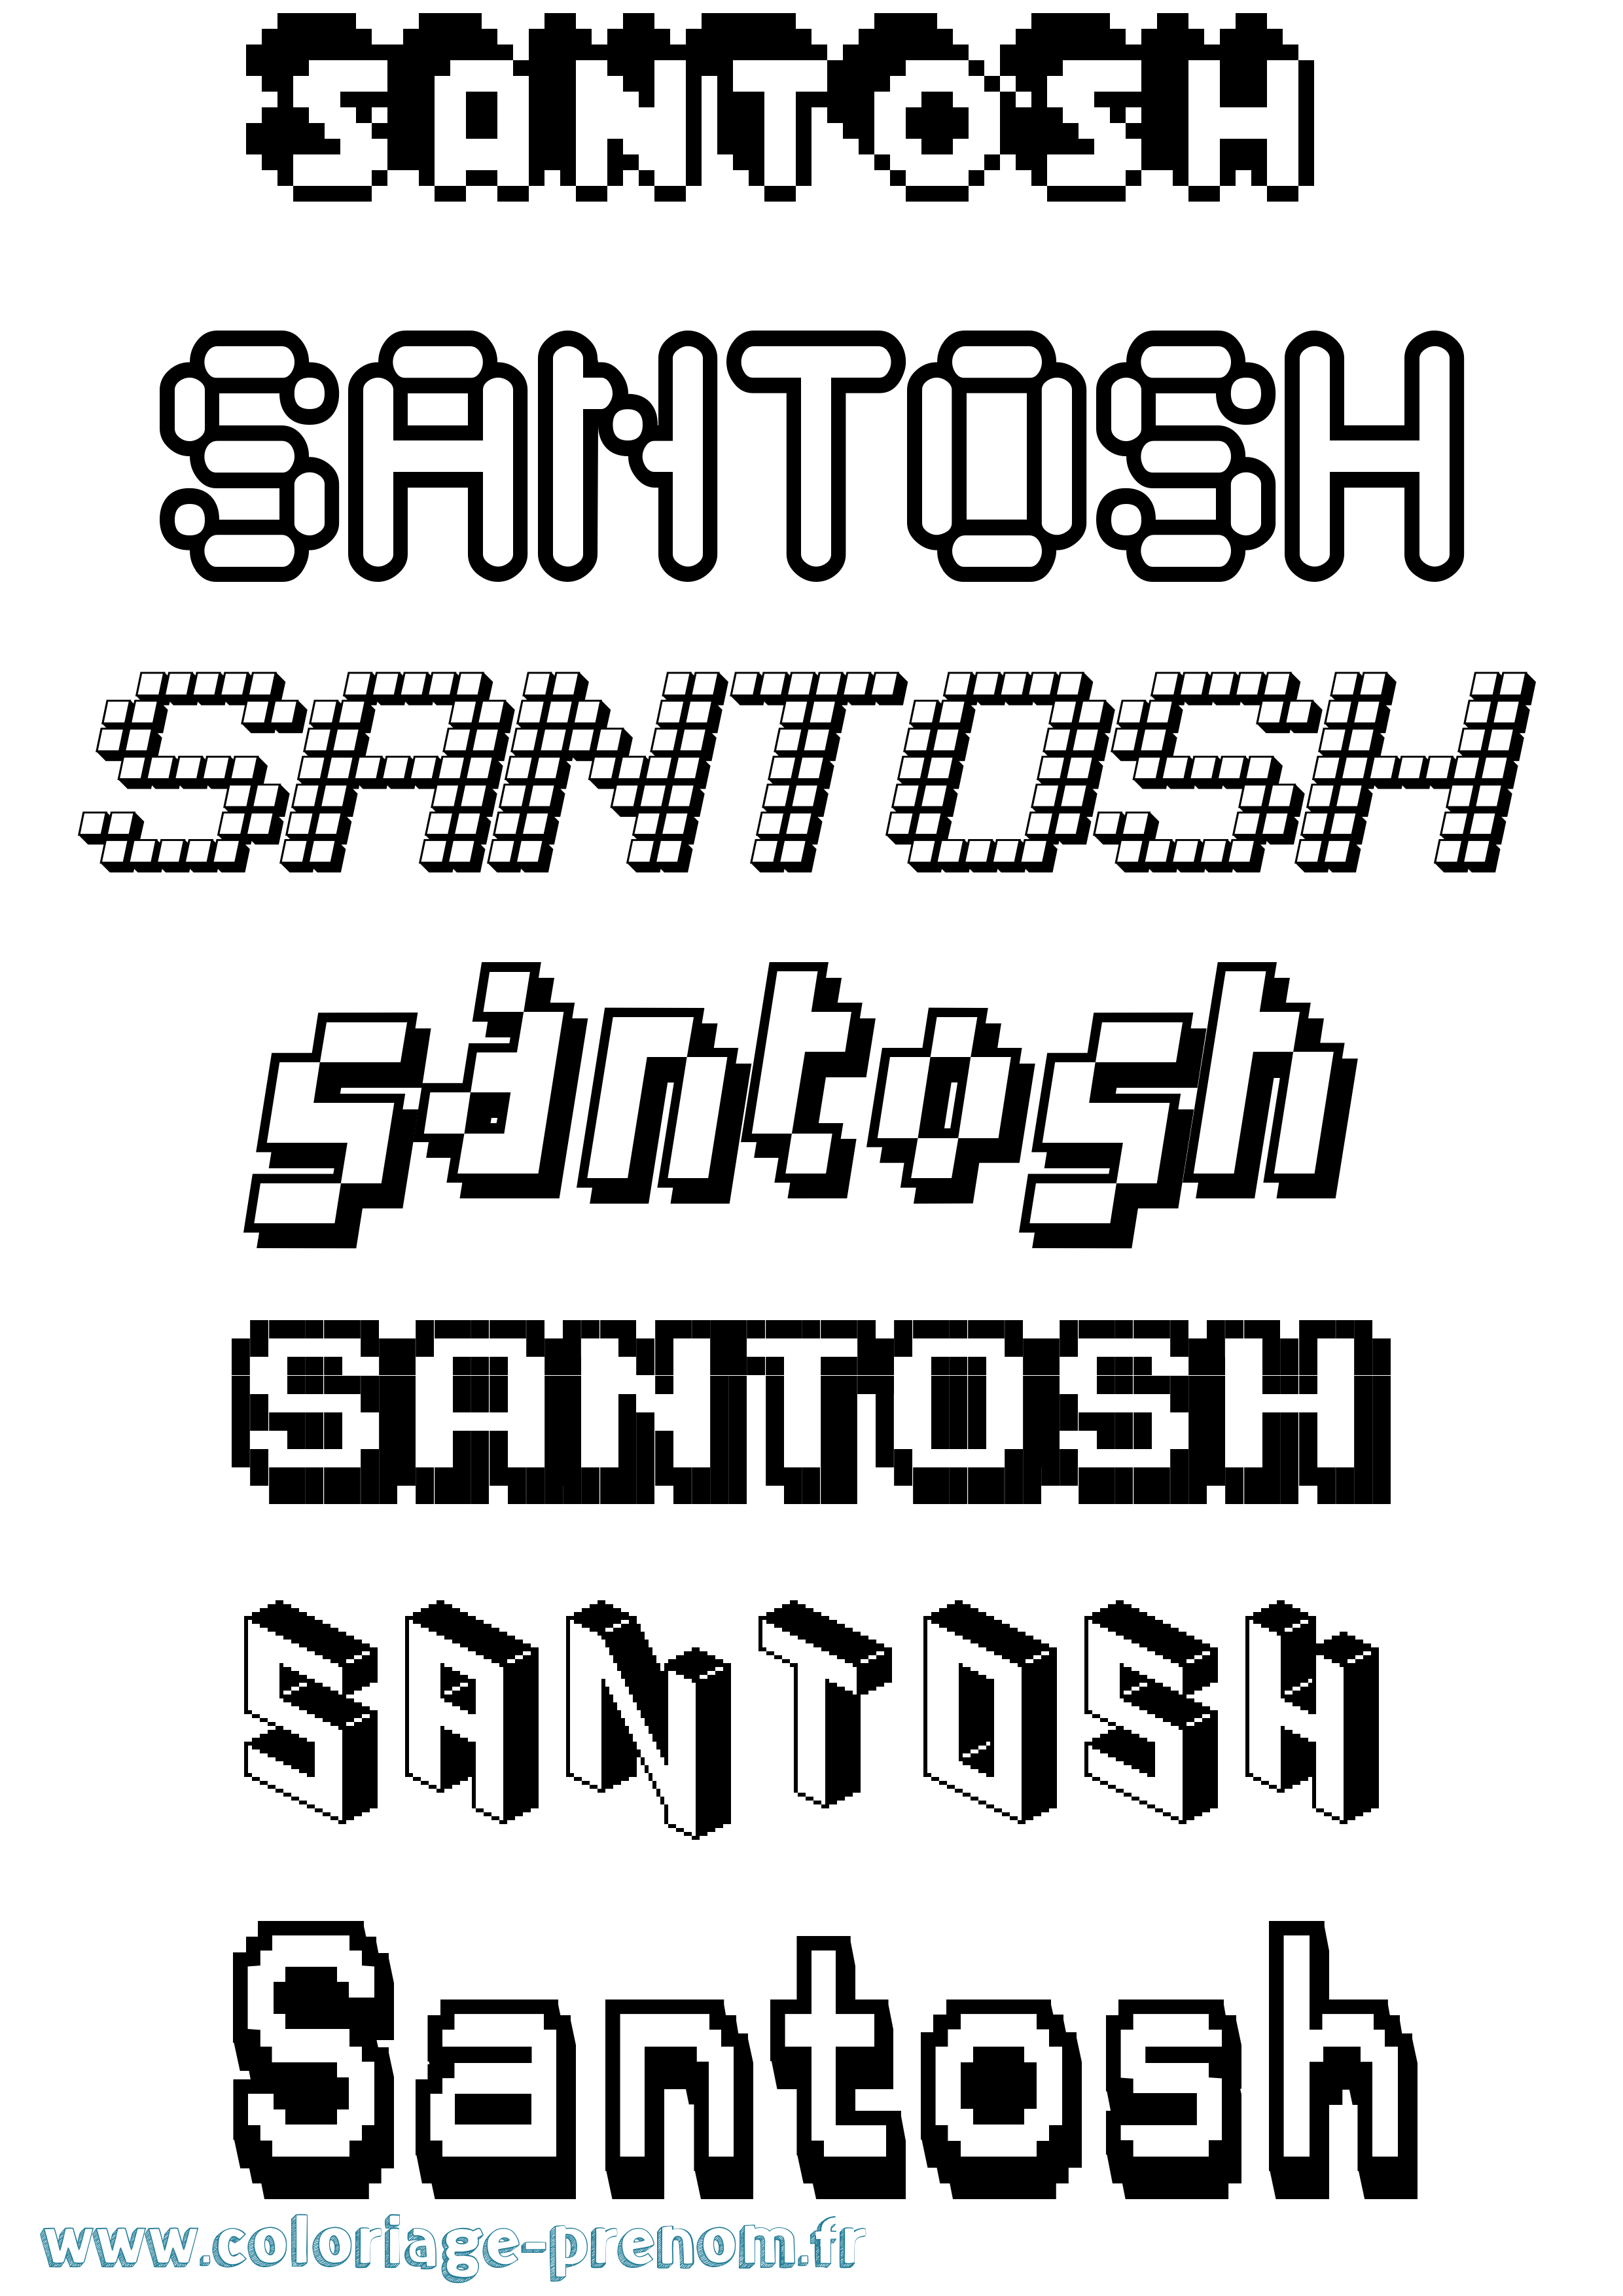 Coloriage prénom Santosh Pixel